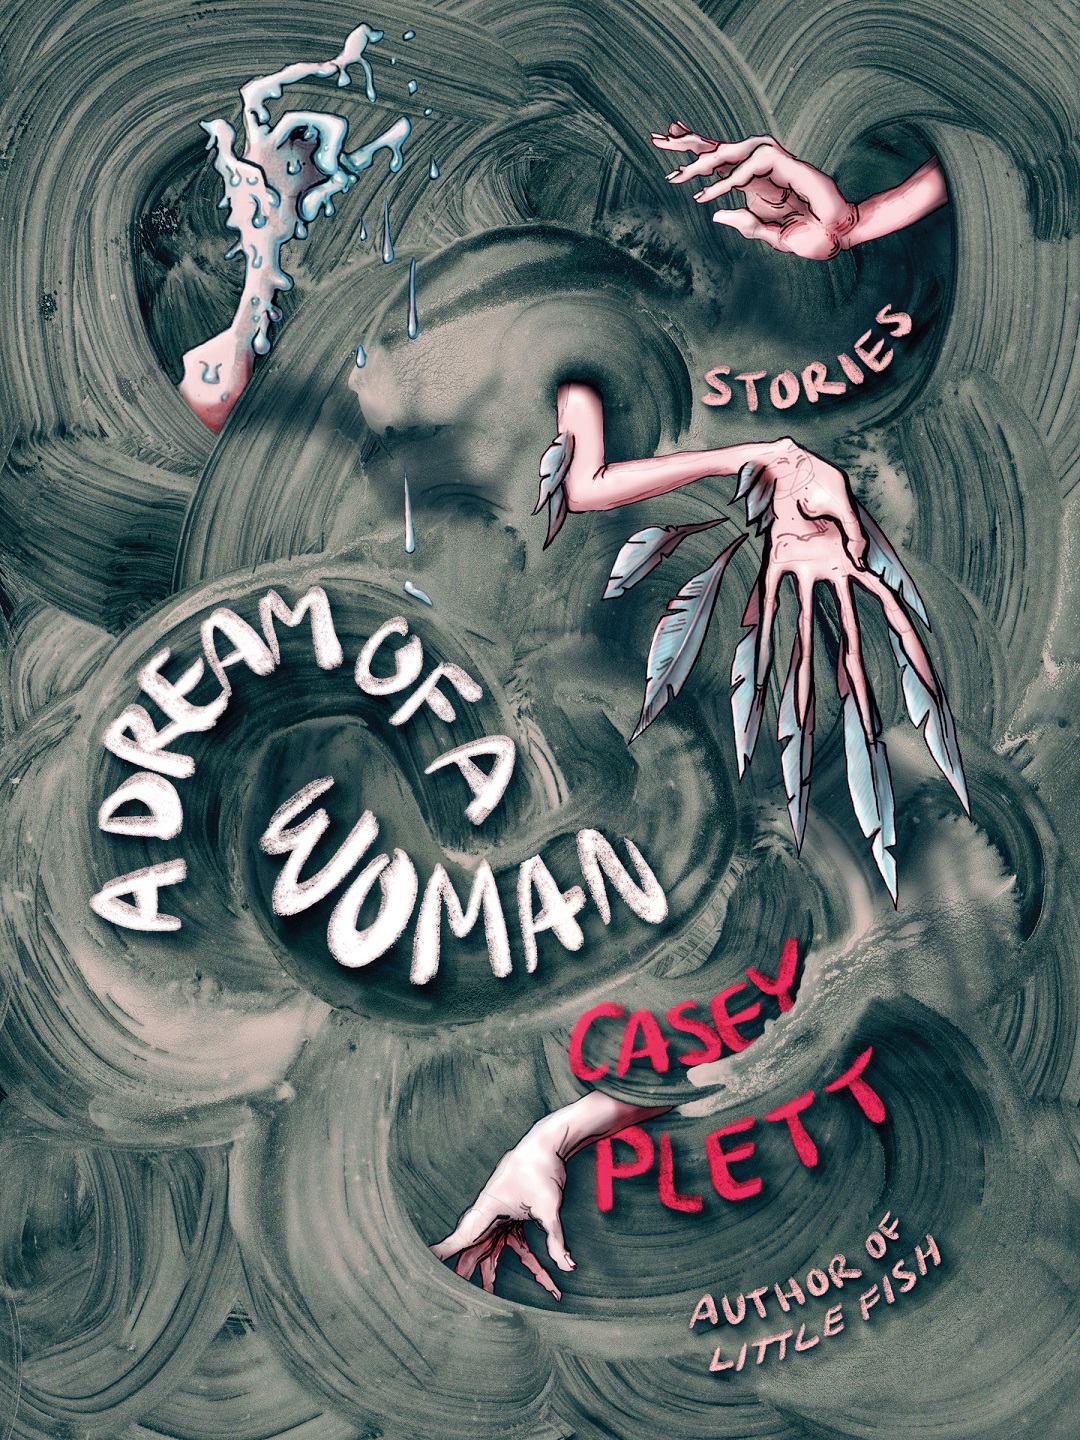 Casey Plett's A Dream of a Woman